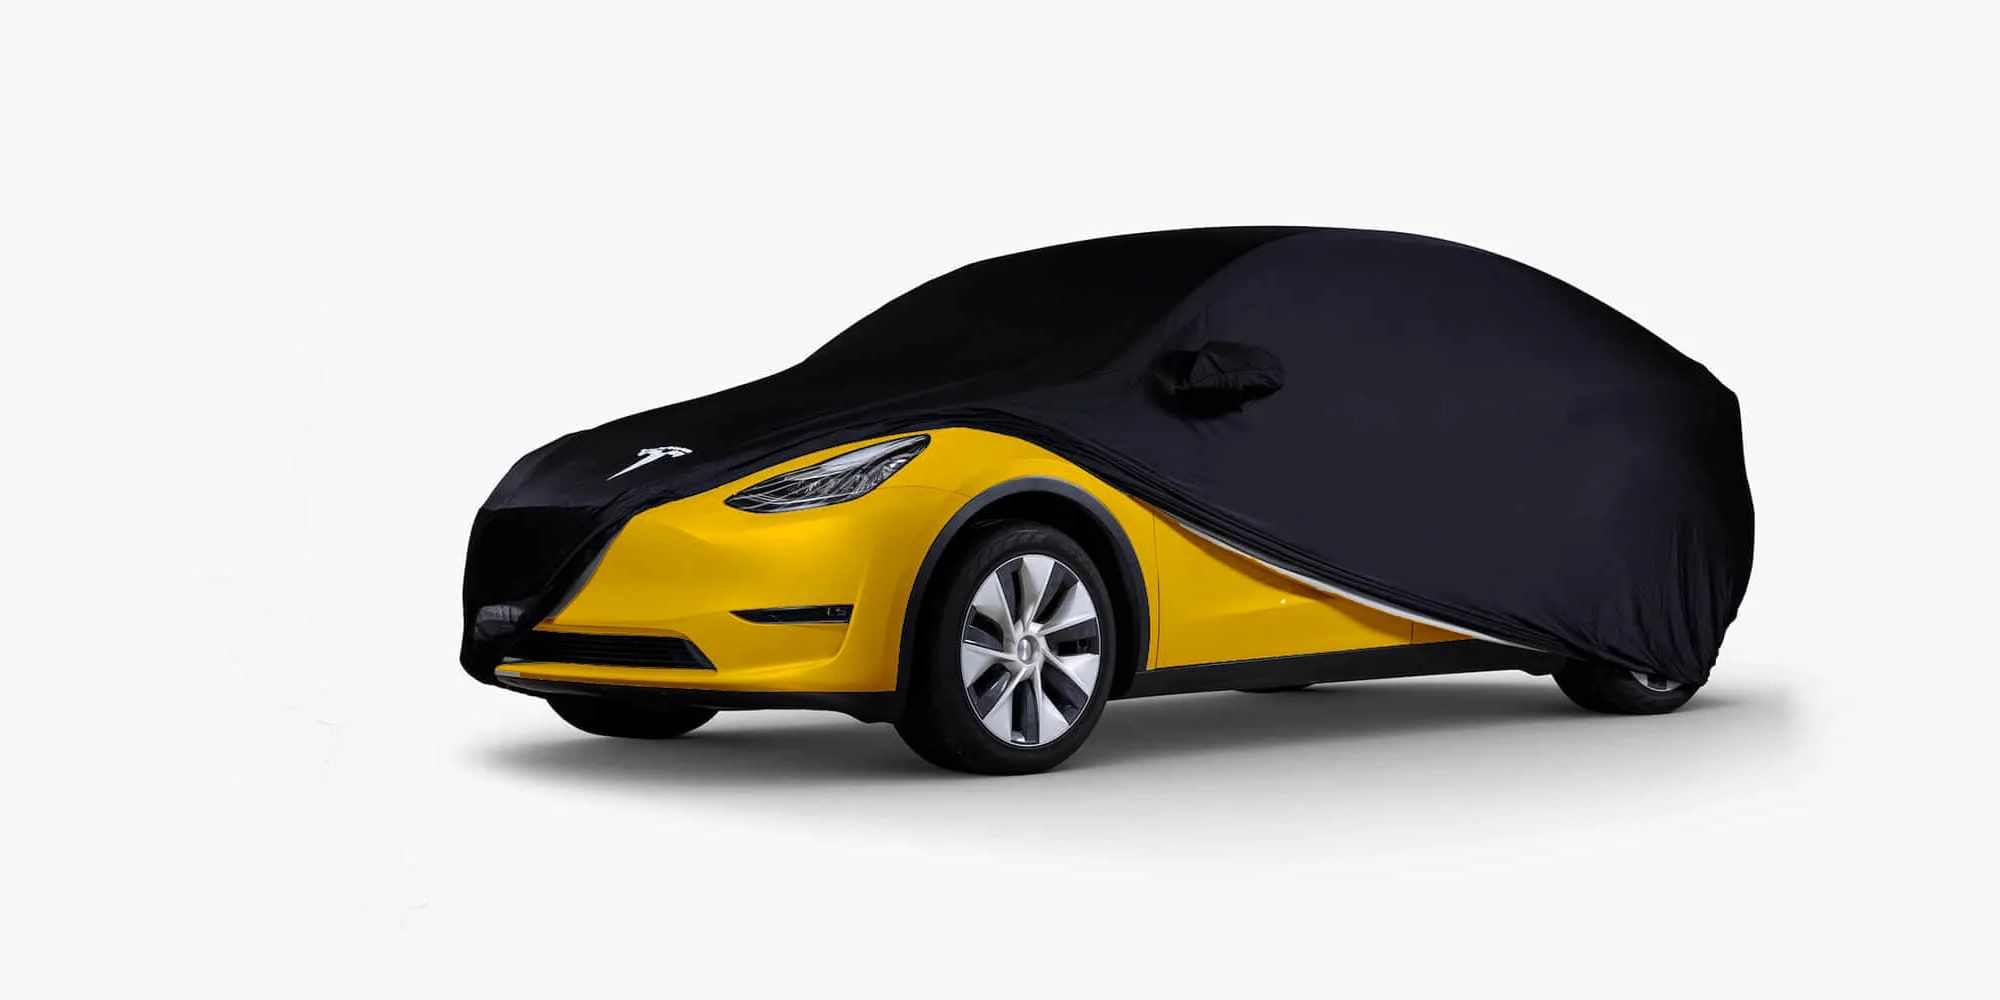 Telsa RoboTaxi based on Taxi Cab Yellow Tesla Model 3